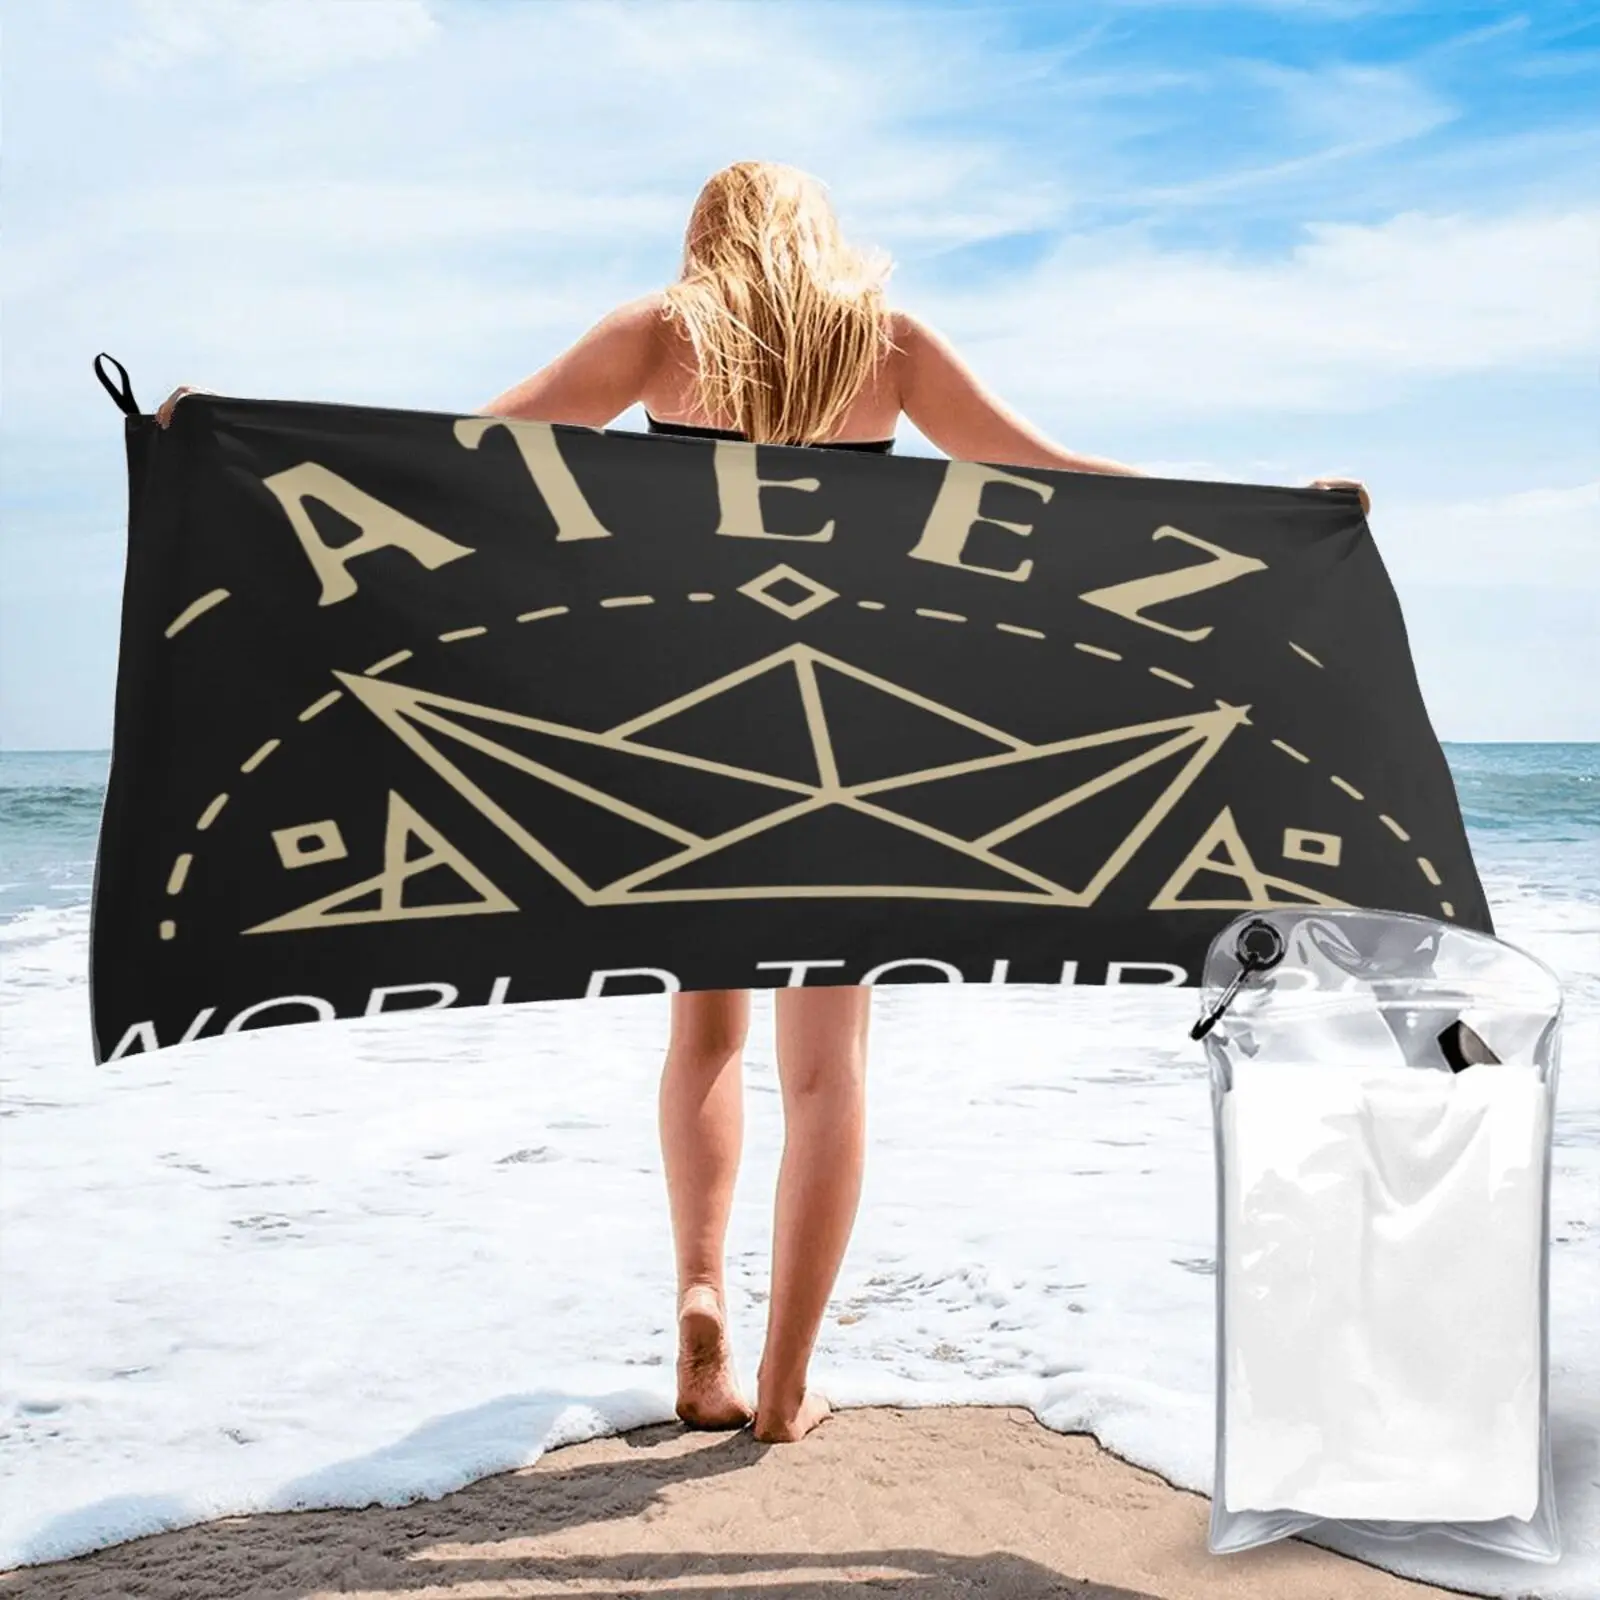 

Пляжное полотенце Ateez World Tour Kpop Ateez 2020, Большое пляжное полотенце, полотенце s, банное полотенце для ванны и сауны, детское полотенце для ванно...